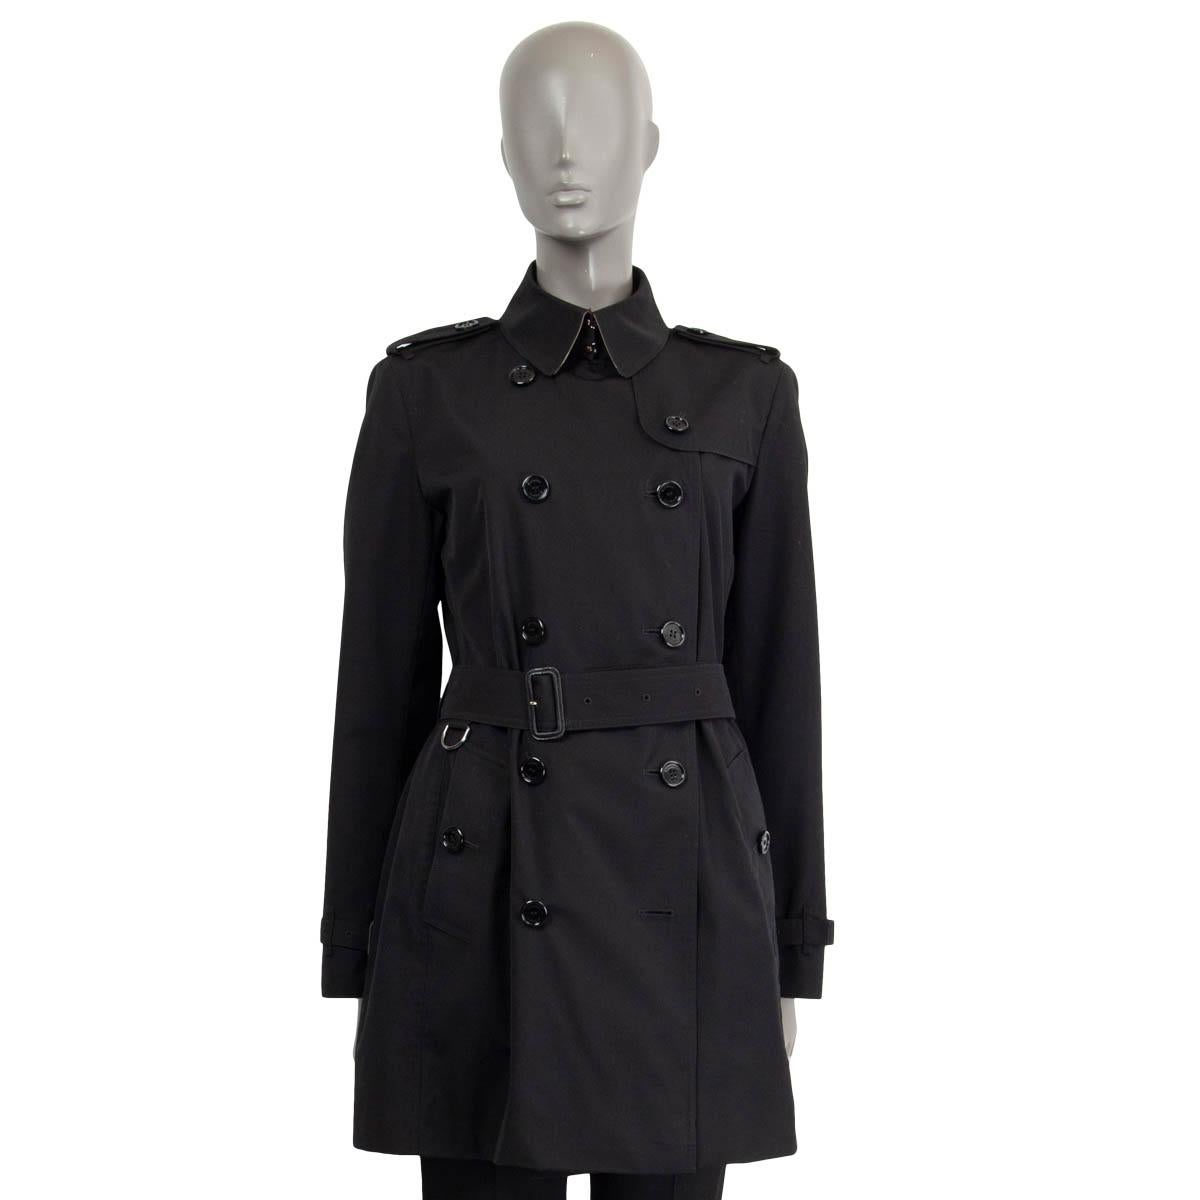 BURBERRY LONDON black cotton blend KENSINGTON SHORT TRENCH Coat Jacket 10 S